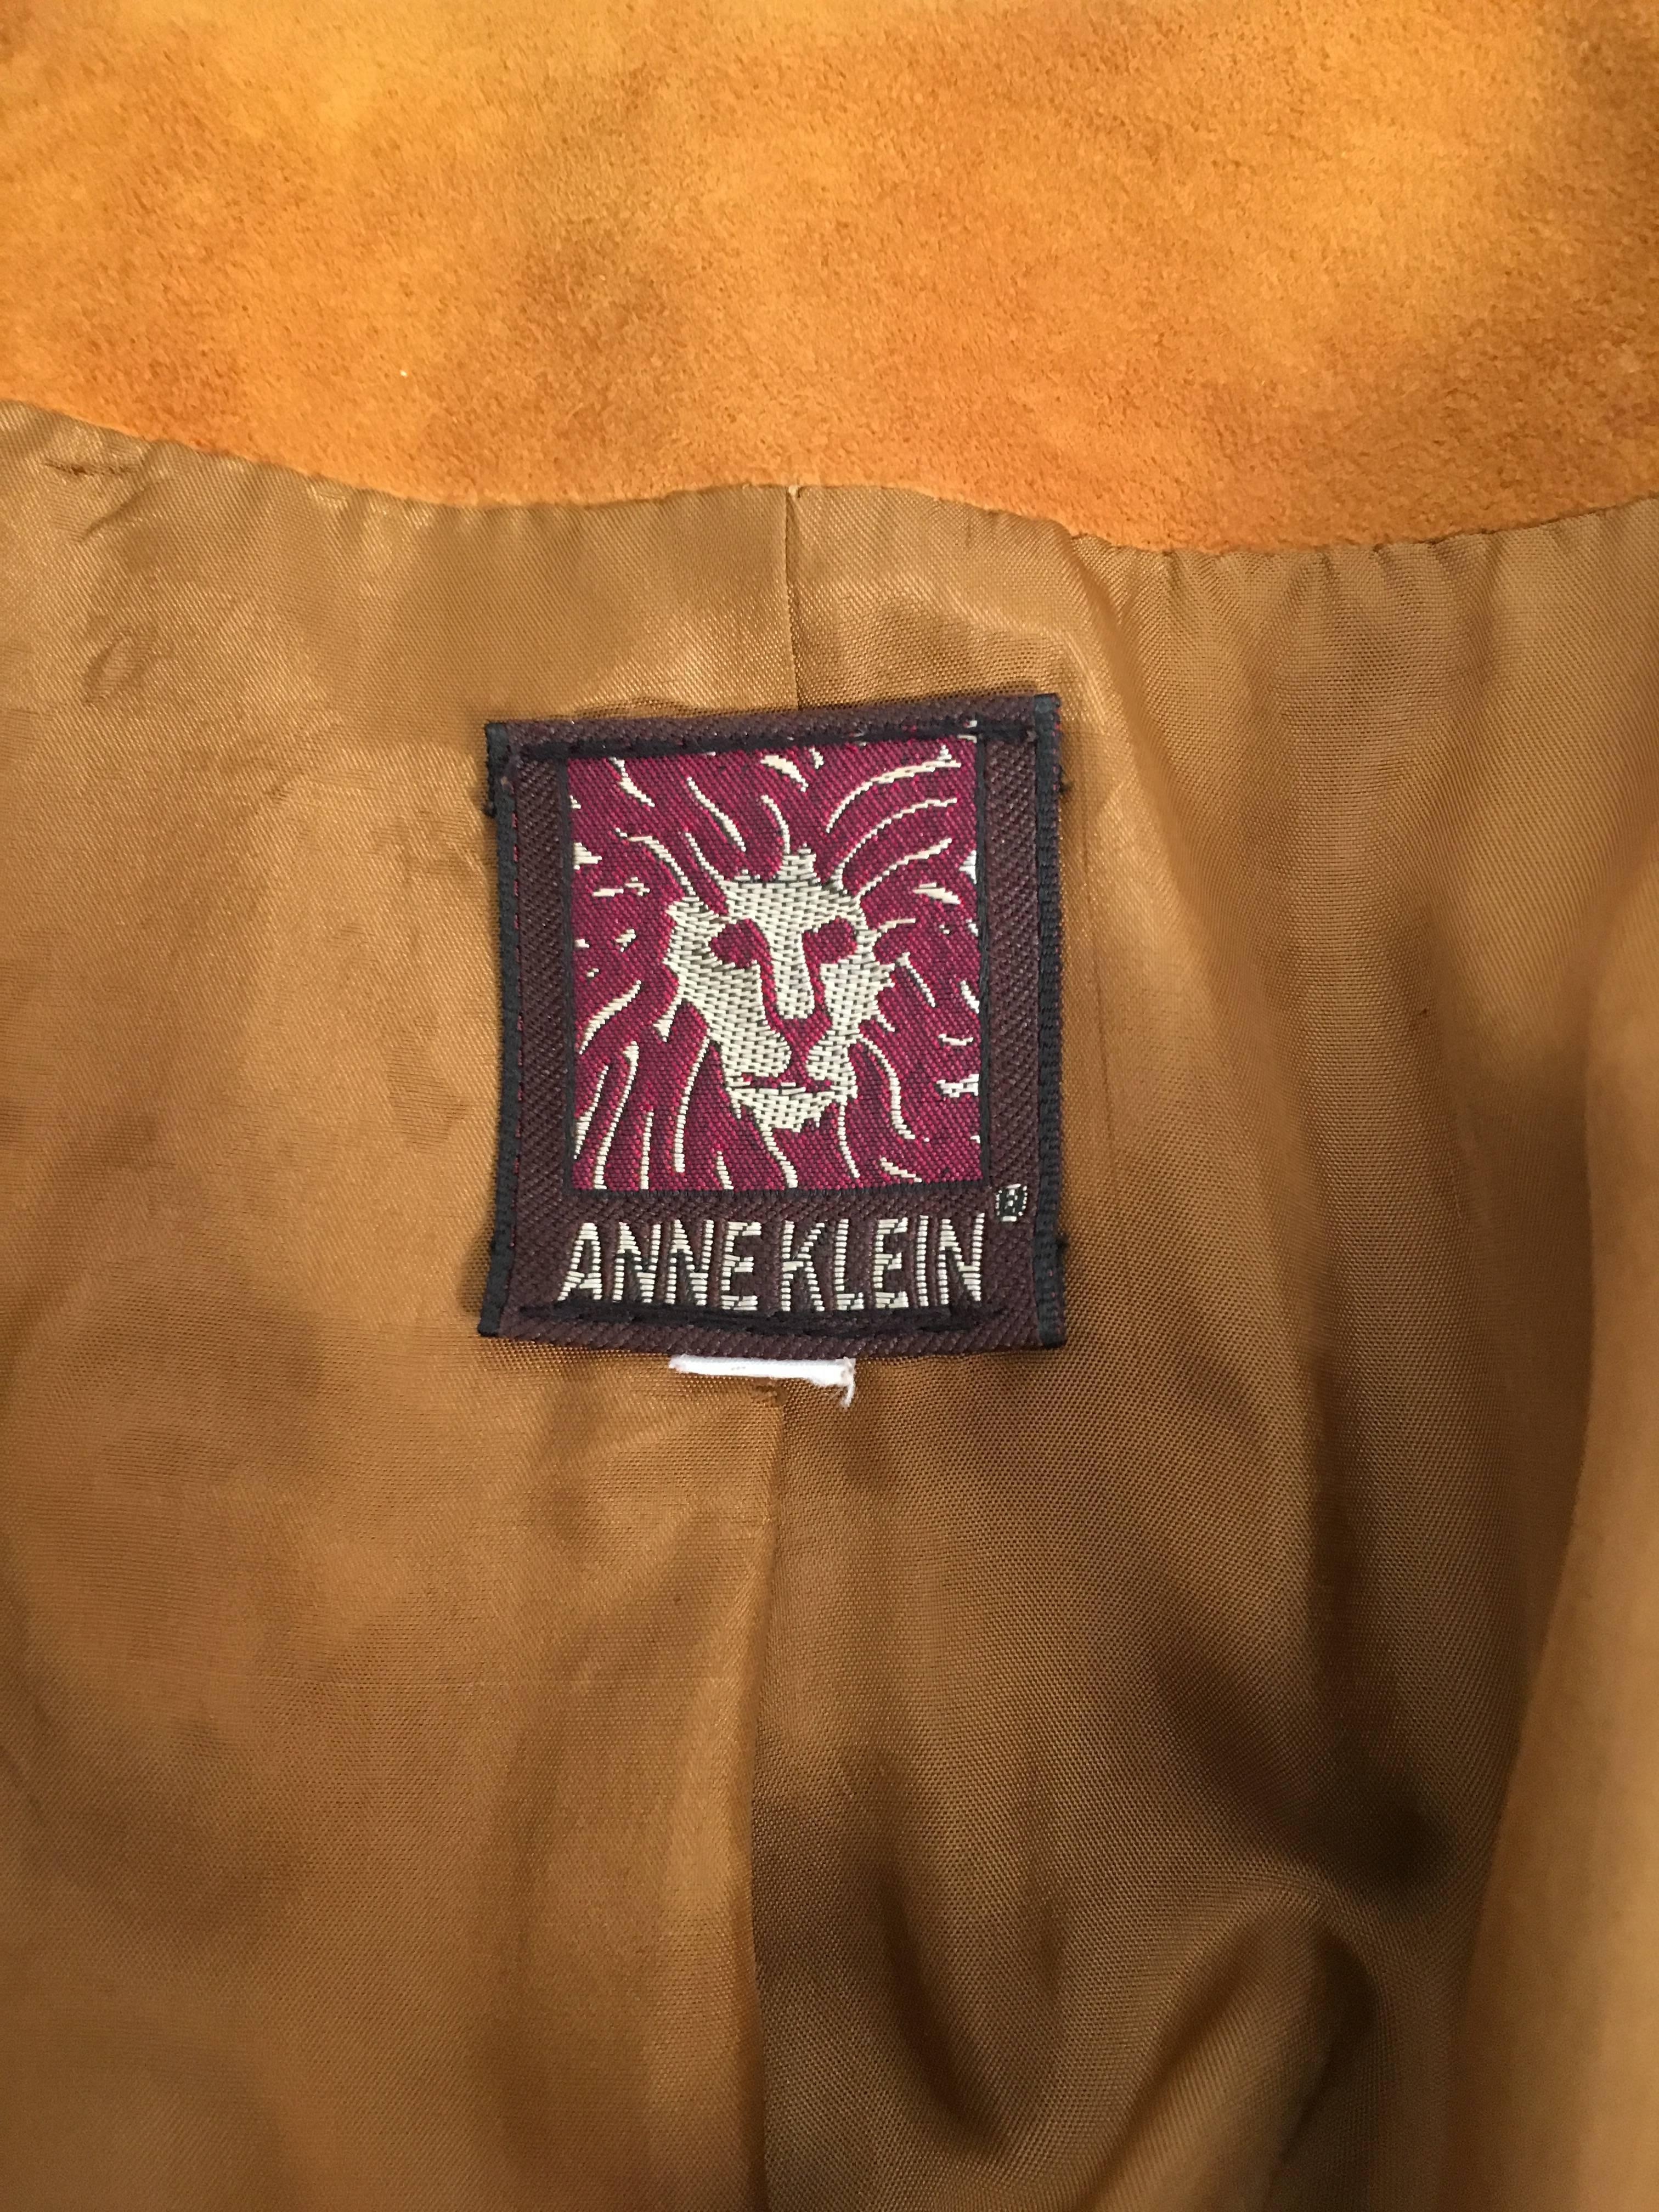 Anne Klein by Donna Karan 1980s Tan Suede Bolero Jacket Size 10 / 12. For Sale 2